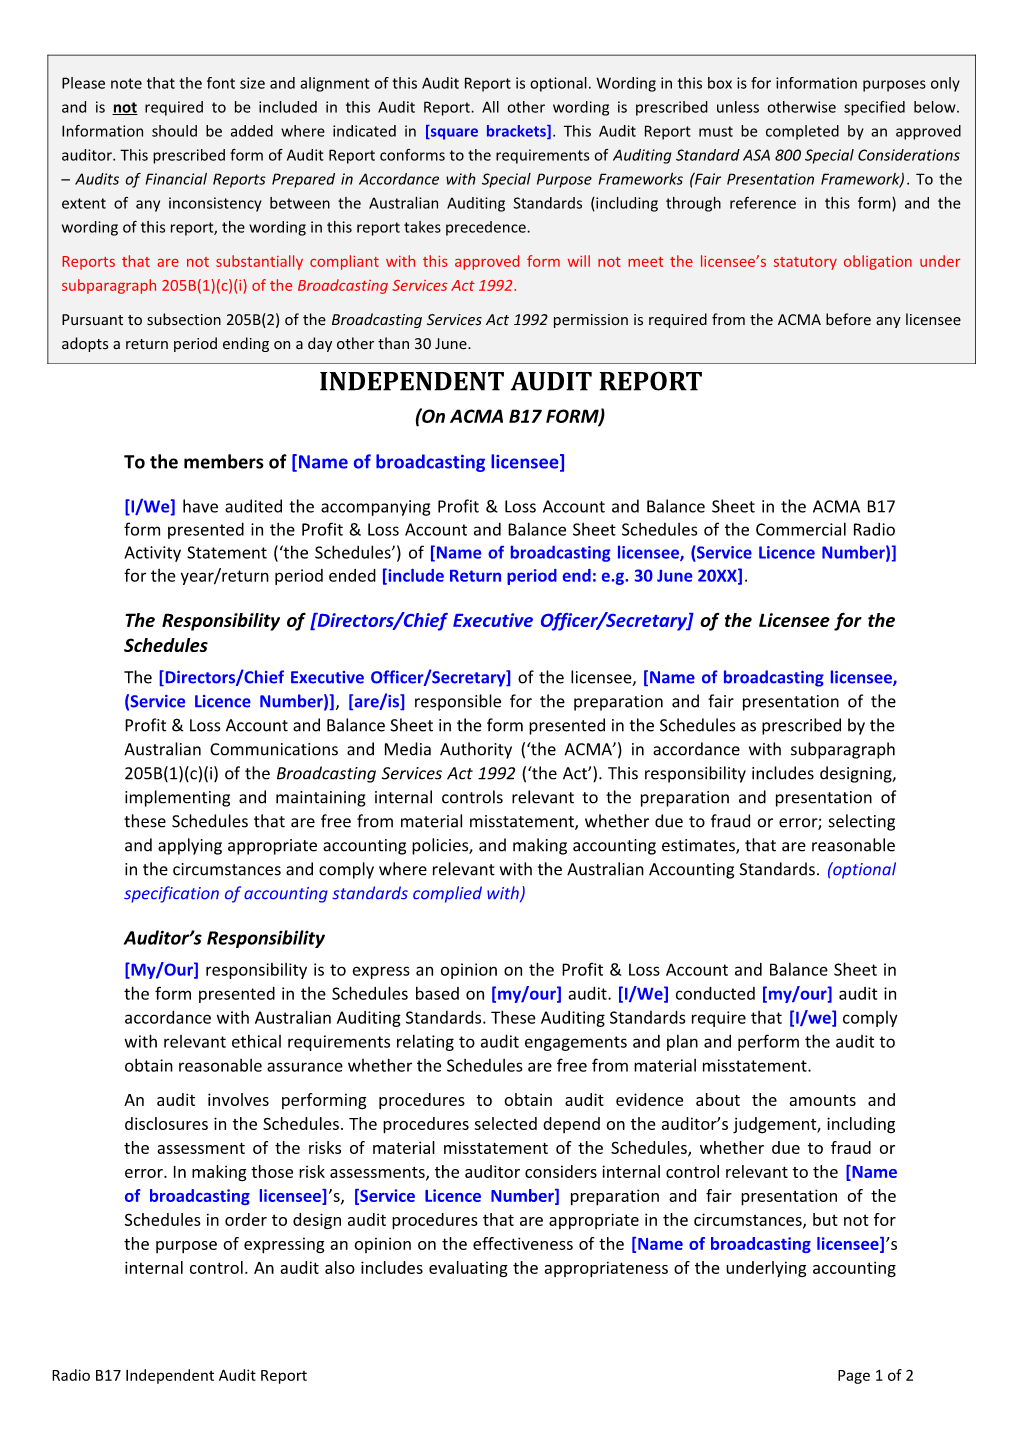 Independent Audit Report (ACMA B17 Radio Form)